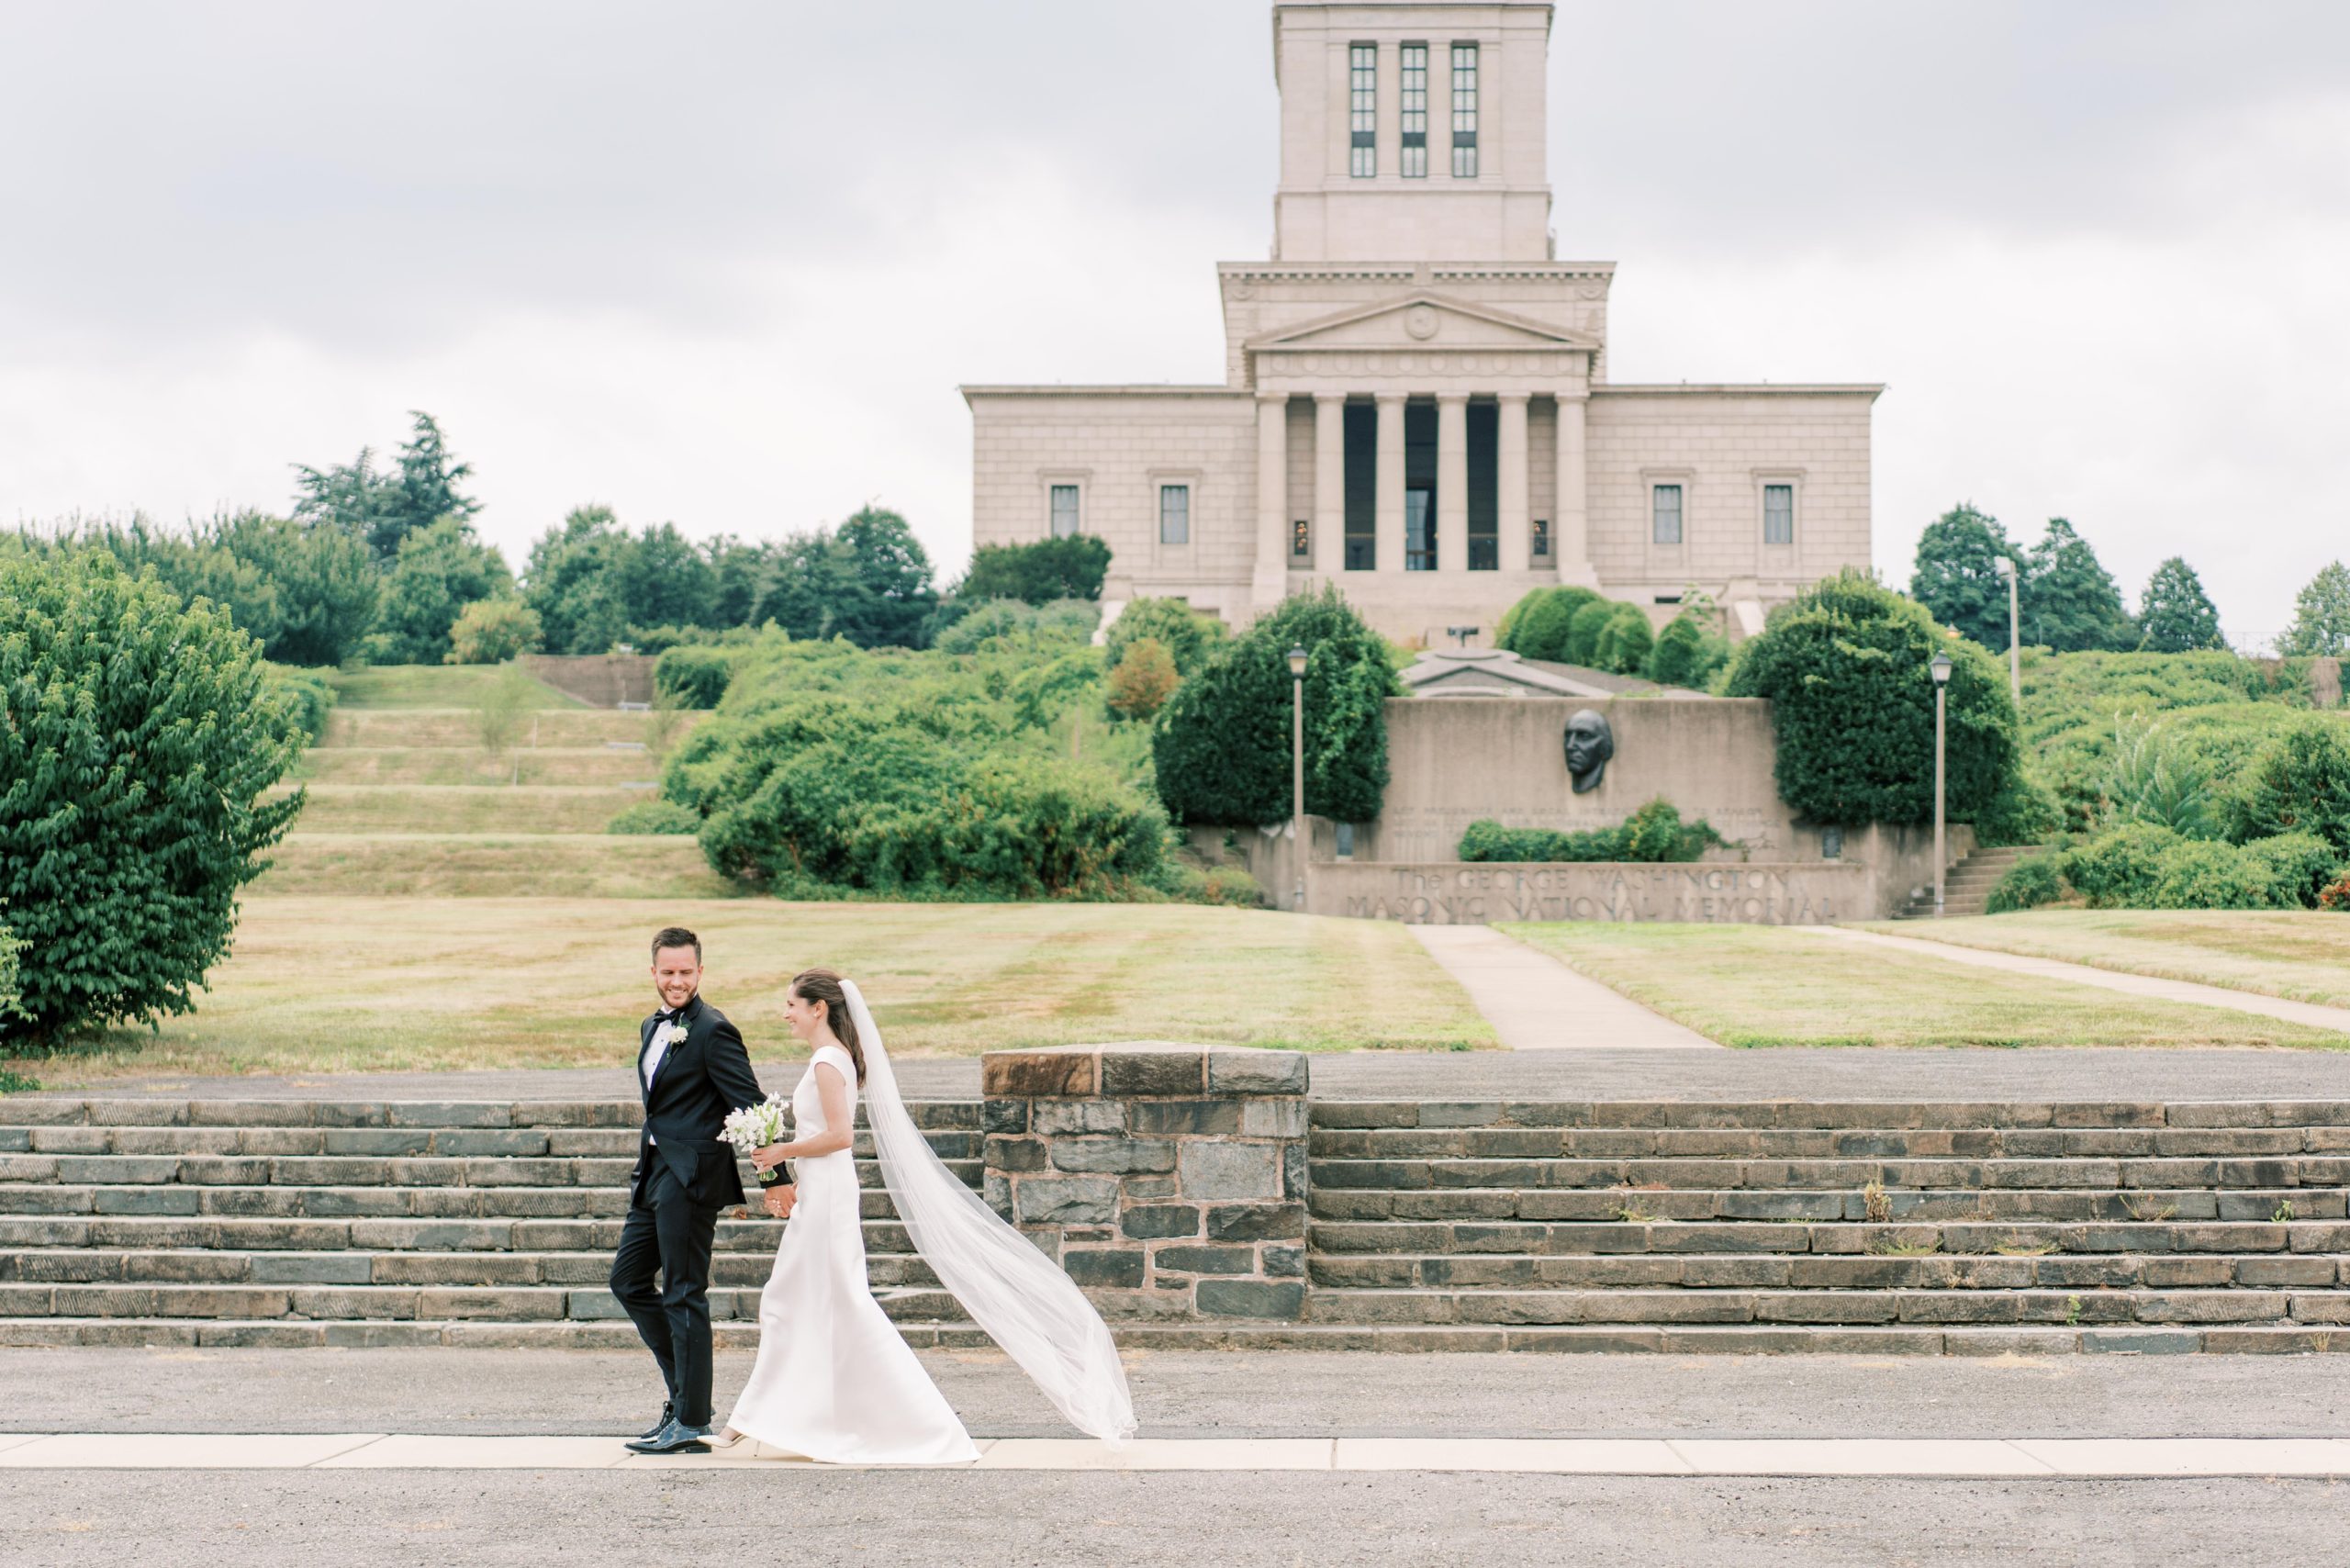 A beautiful summer wedding at the George Washington Masonic Memorial in Alexandria, VA.